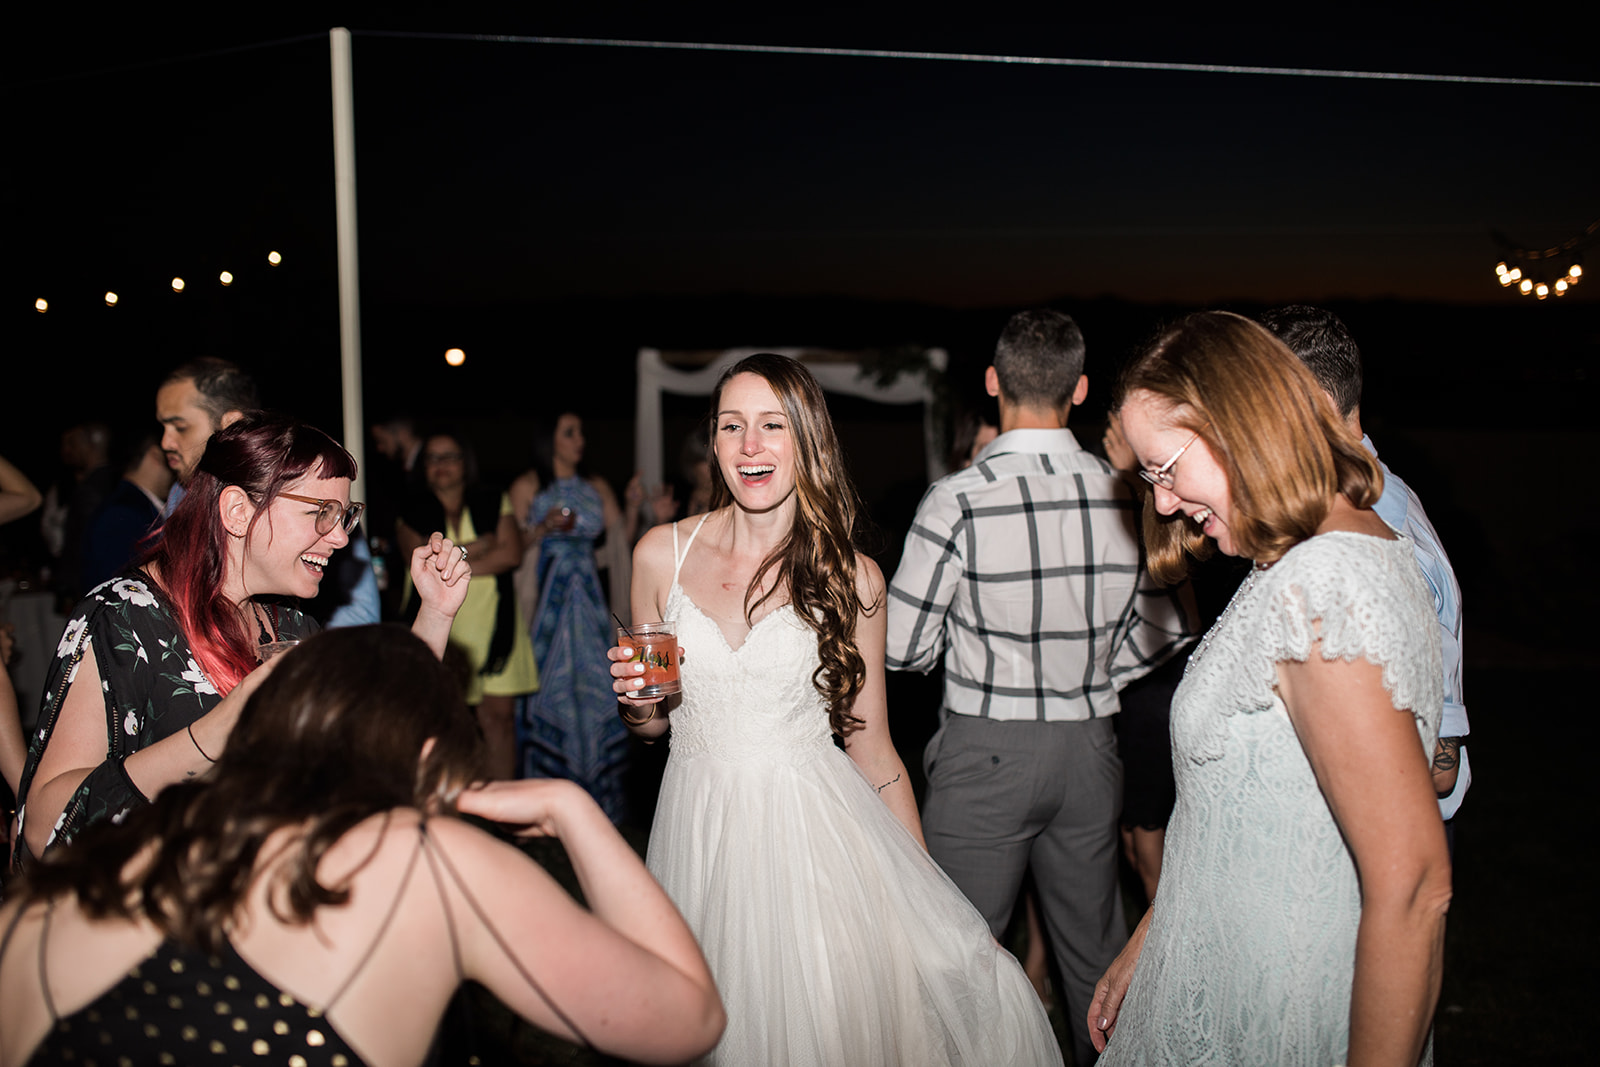 guests enjoy dancing at reception